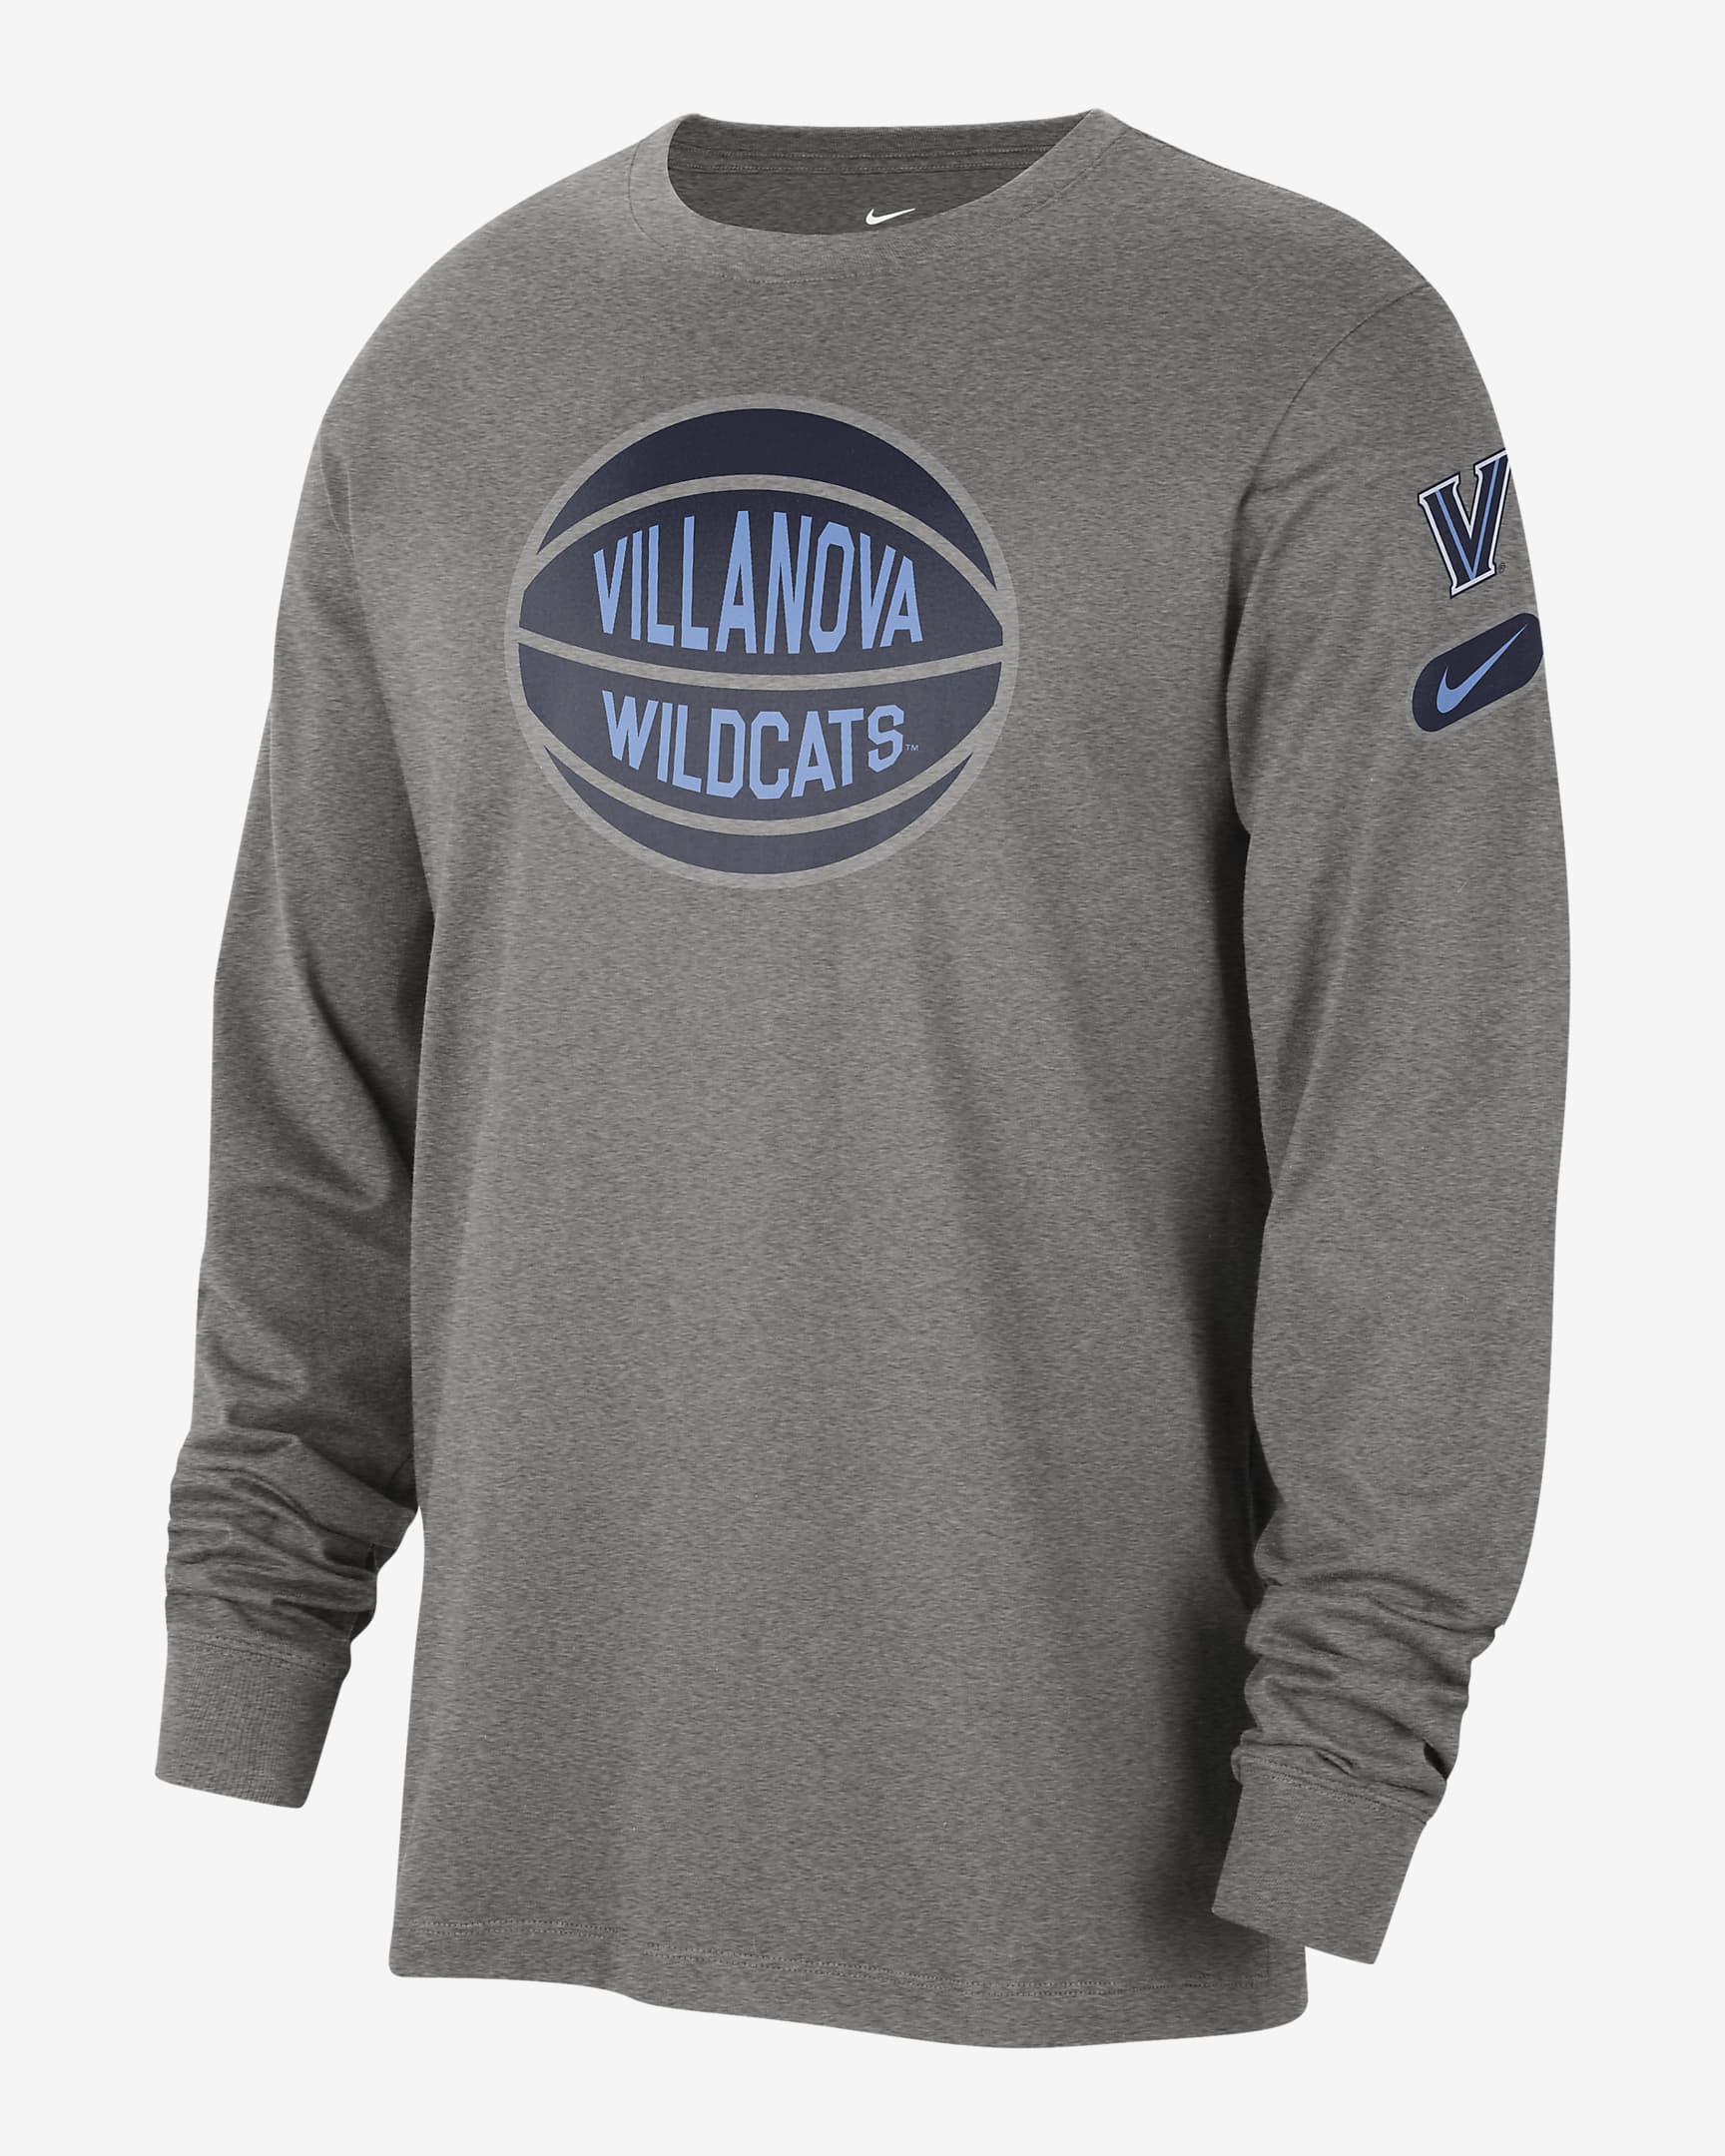 Villanova Fast Break Men's Nike College Long-Sleeve T-Shirt. Nike.com